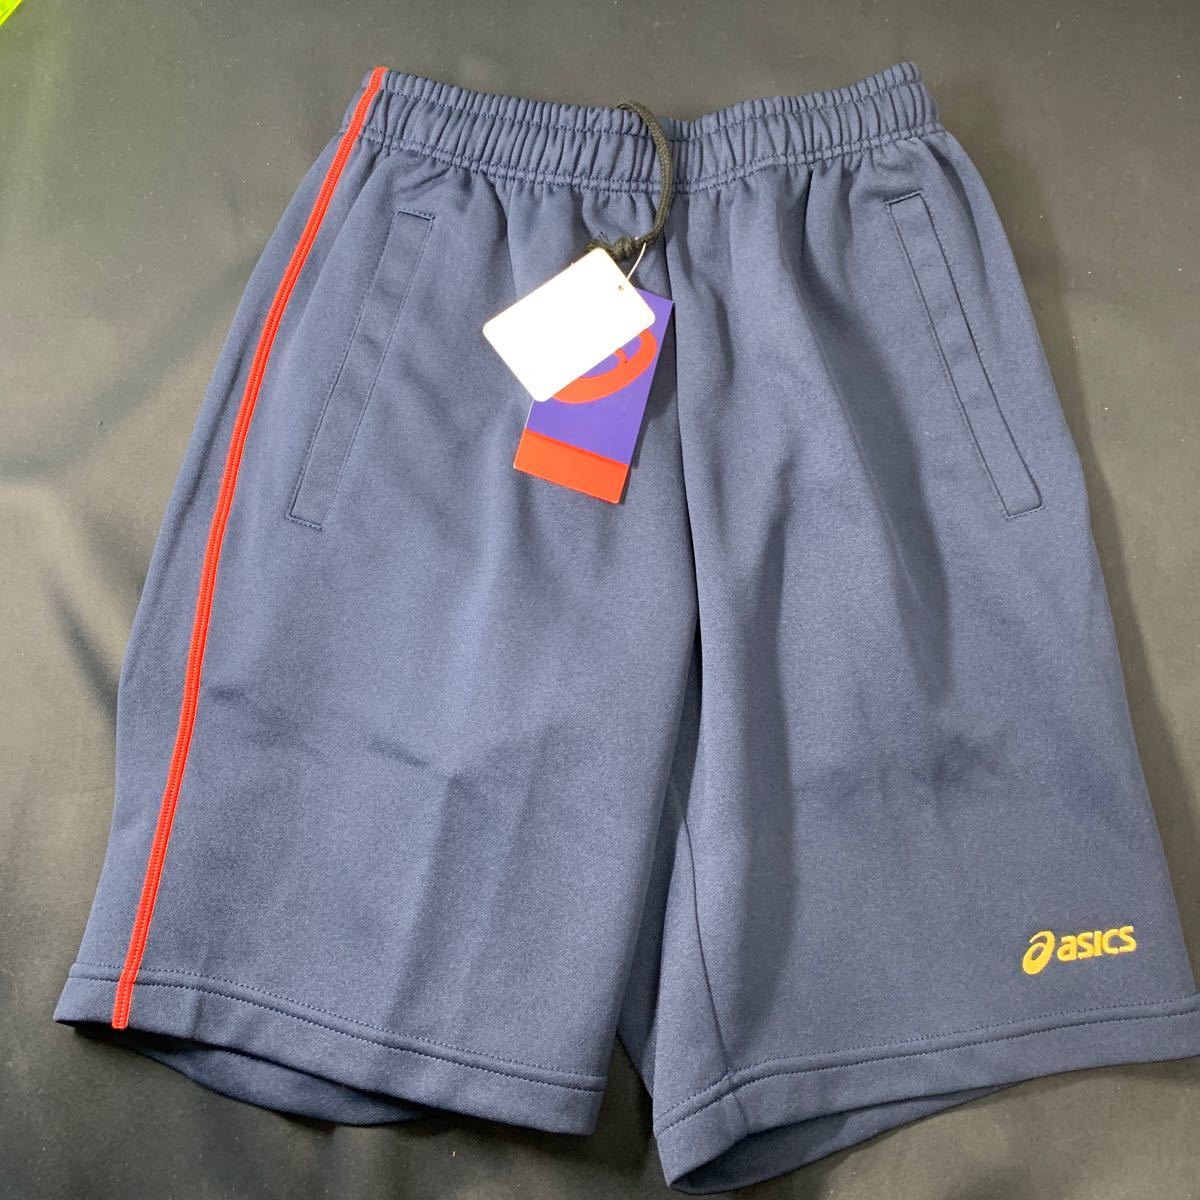 * Osaka Sakai city / receipt possible * unused asics Asics shorts no- navy blue × red waist 78 M size jersey AN-851 sport wear *